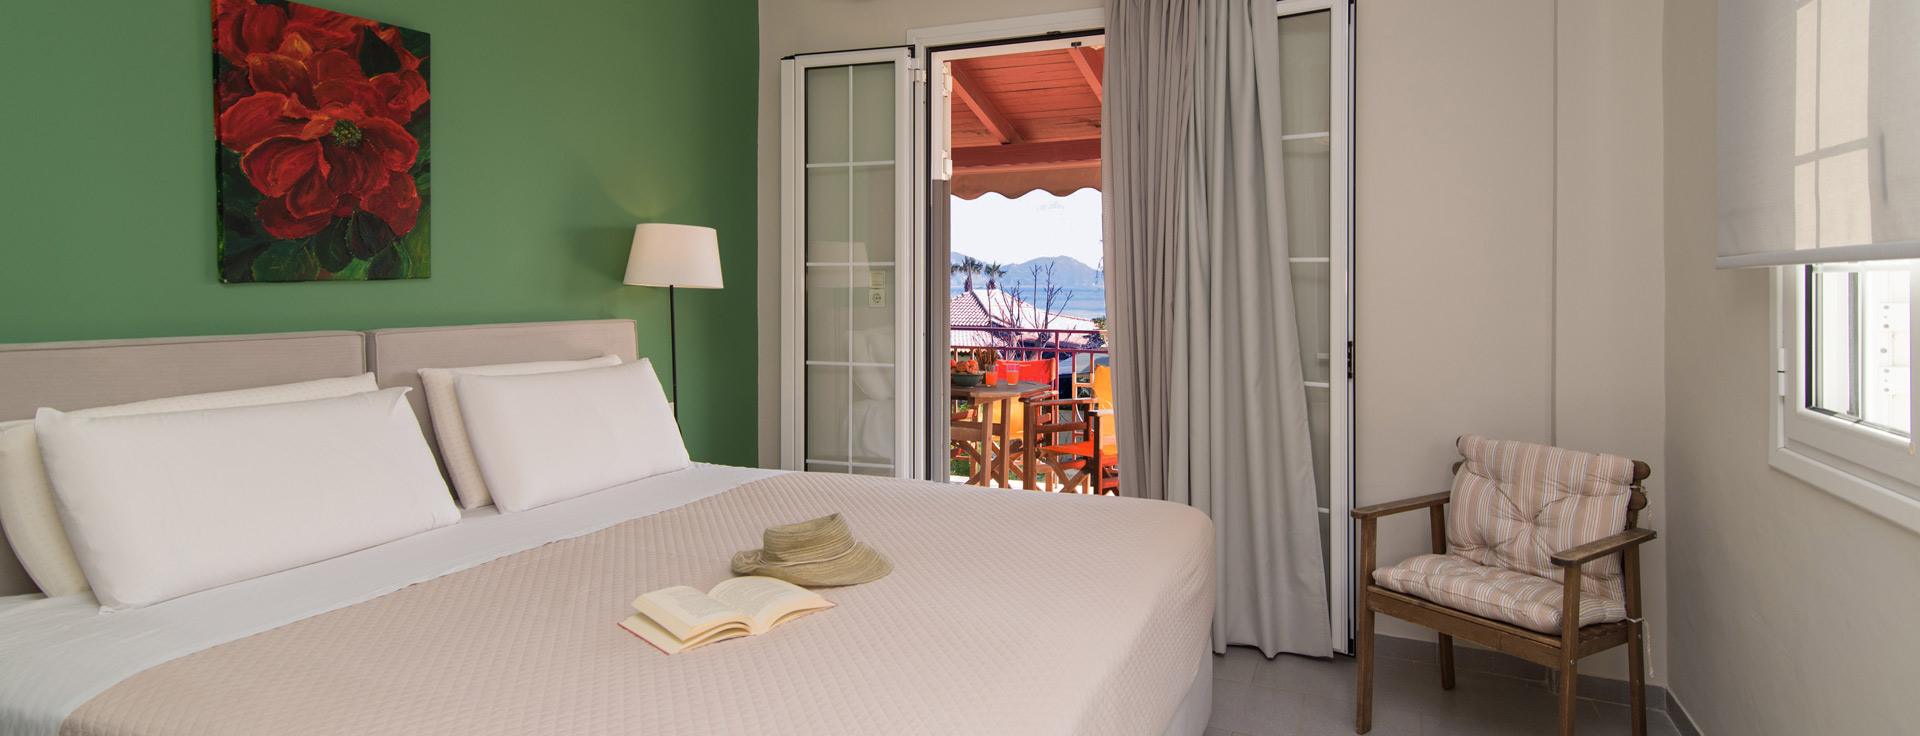 Superior Διαμέρισμα στο Lemonia Accommodations με 3 δωμάτια & βεράντα με θέα τη θάλασσα